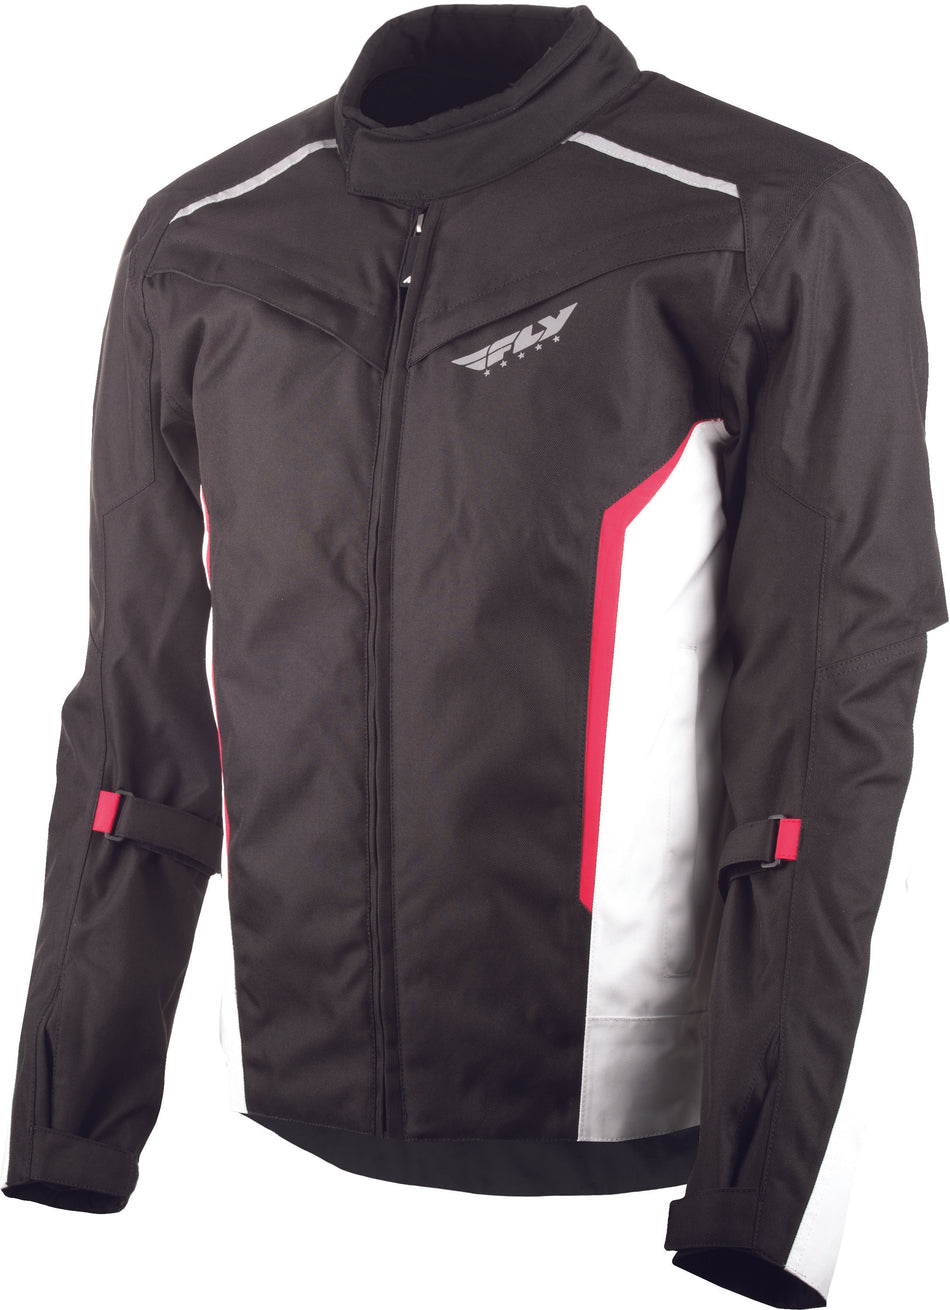 FLY RACING Baseline Jacket Black/White/Red Sm #5958 477-2091~2